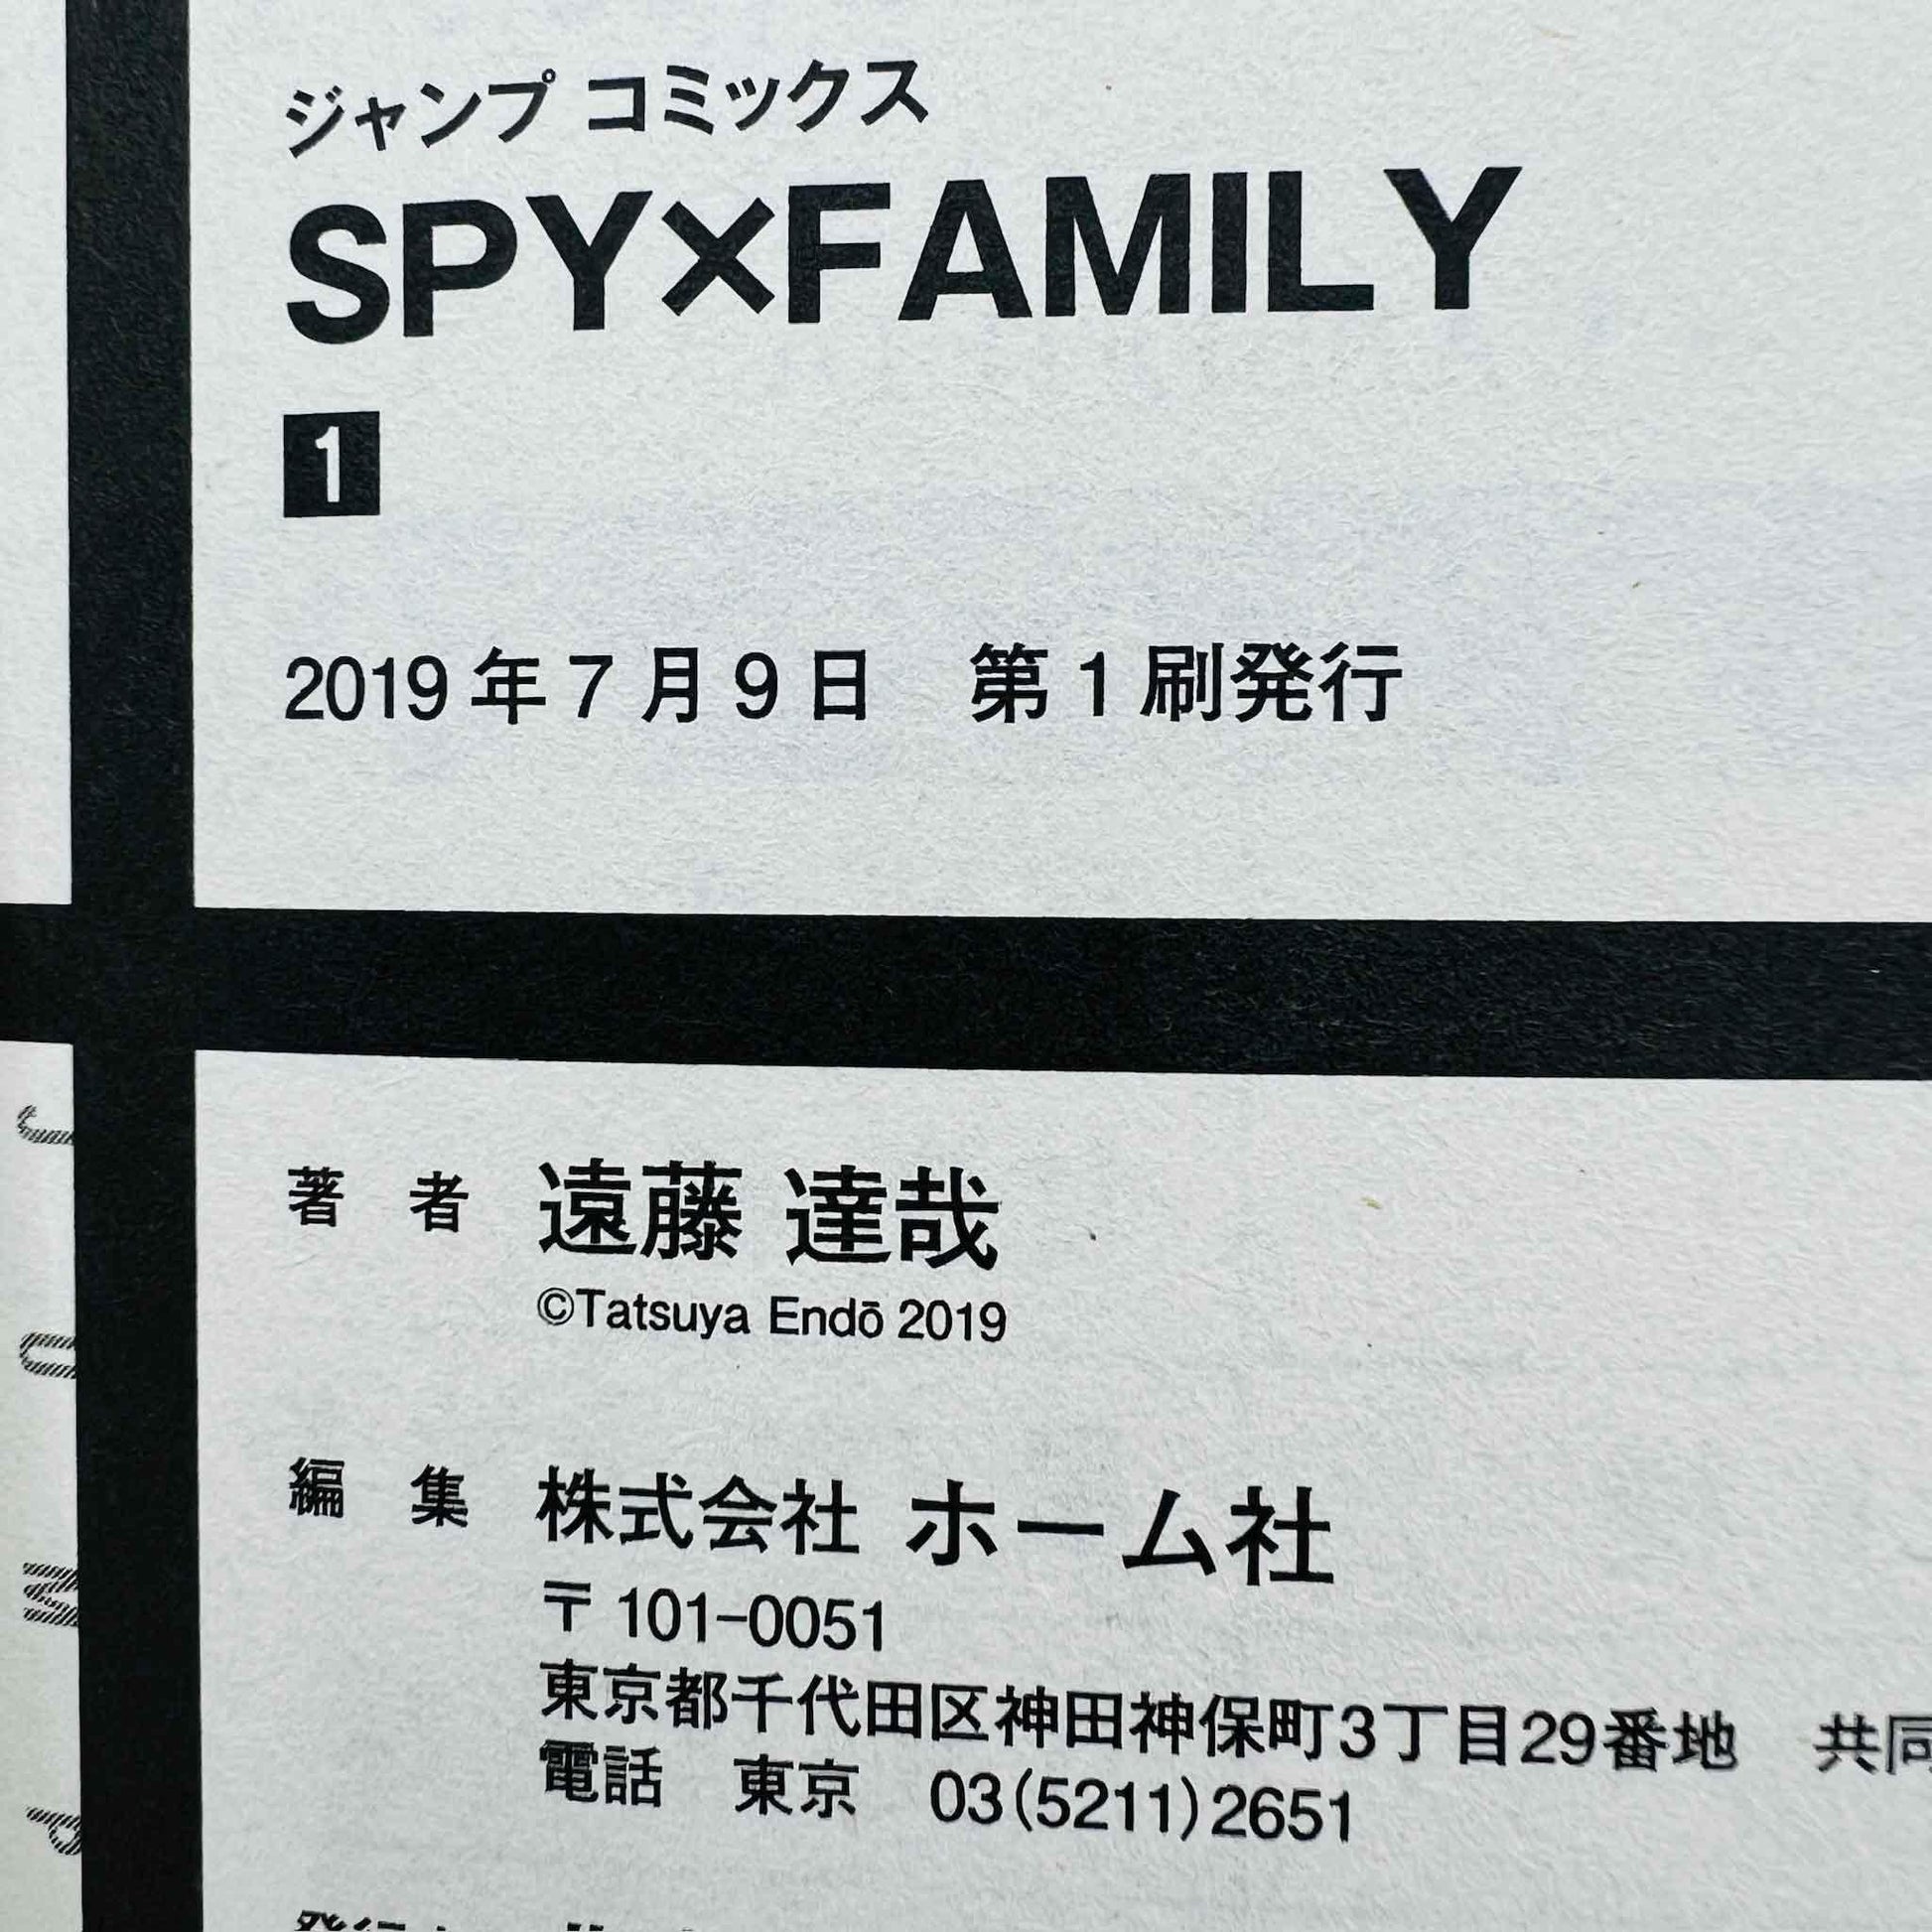 Spy x Family - Volume 01 - 1stPrint.net - 1st First Print Edition Manga Store - M-SPY-01-001